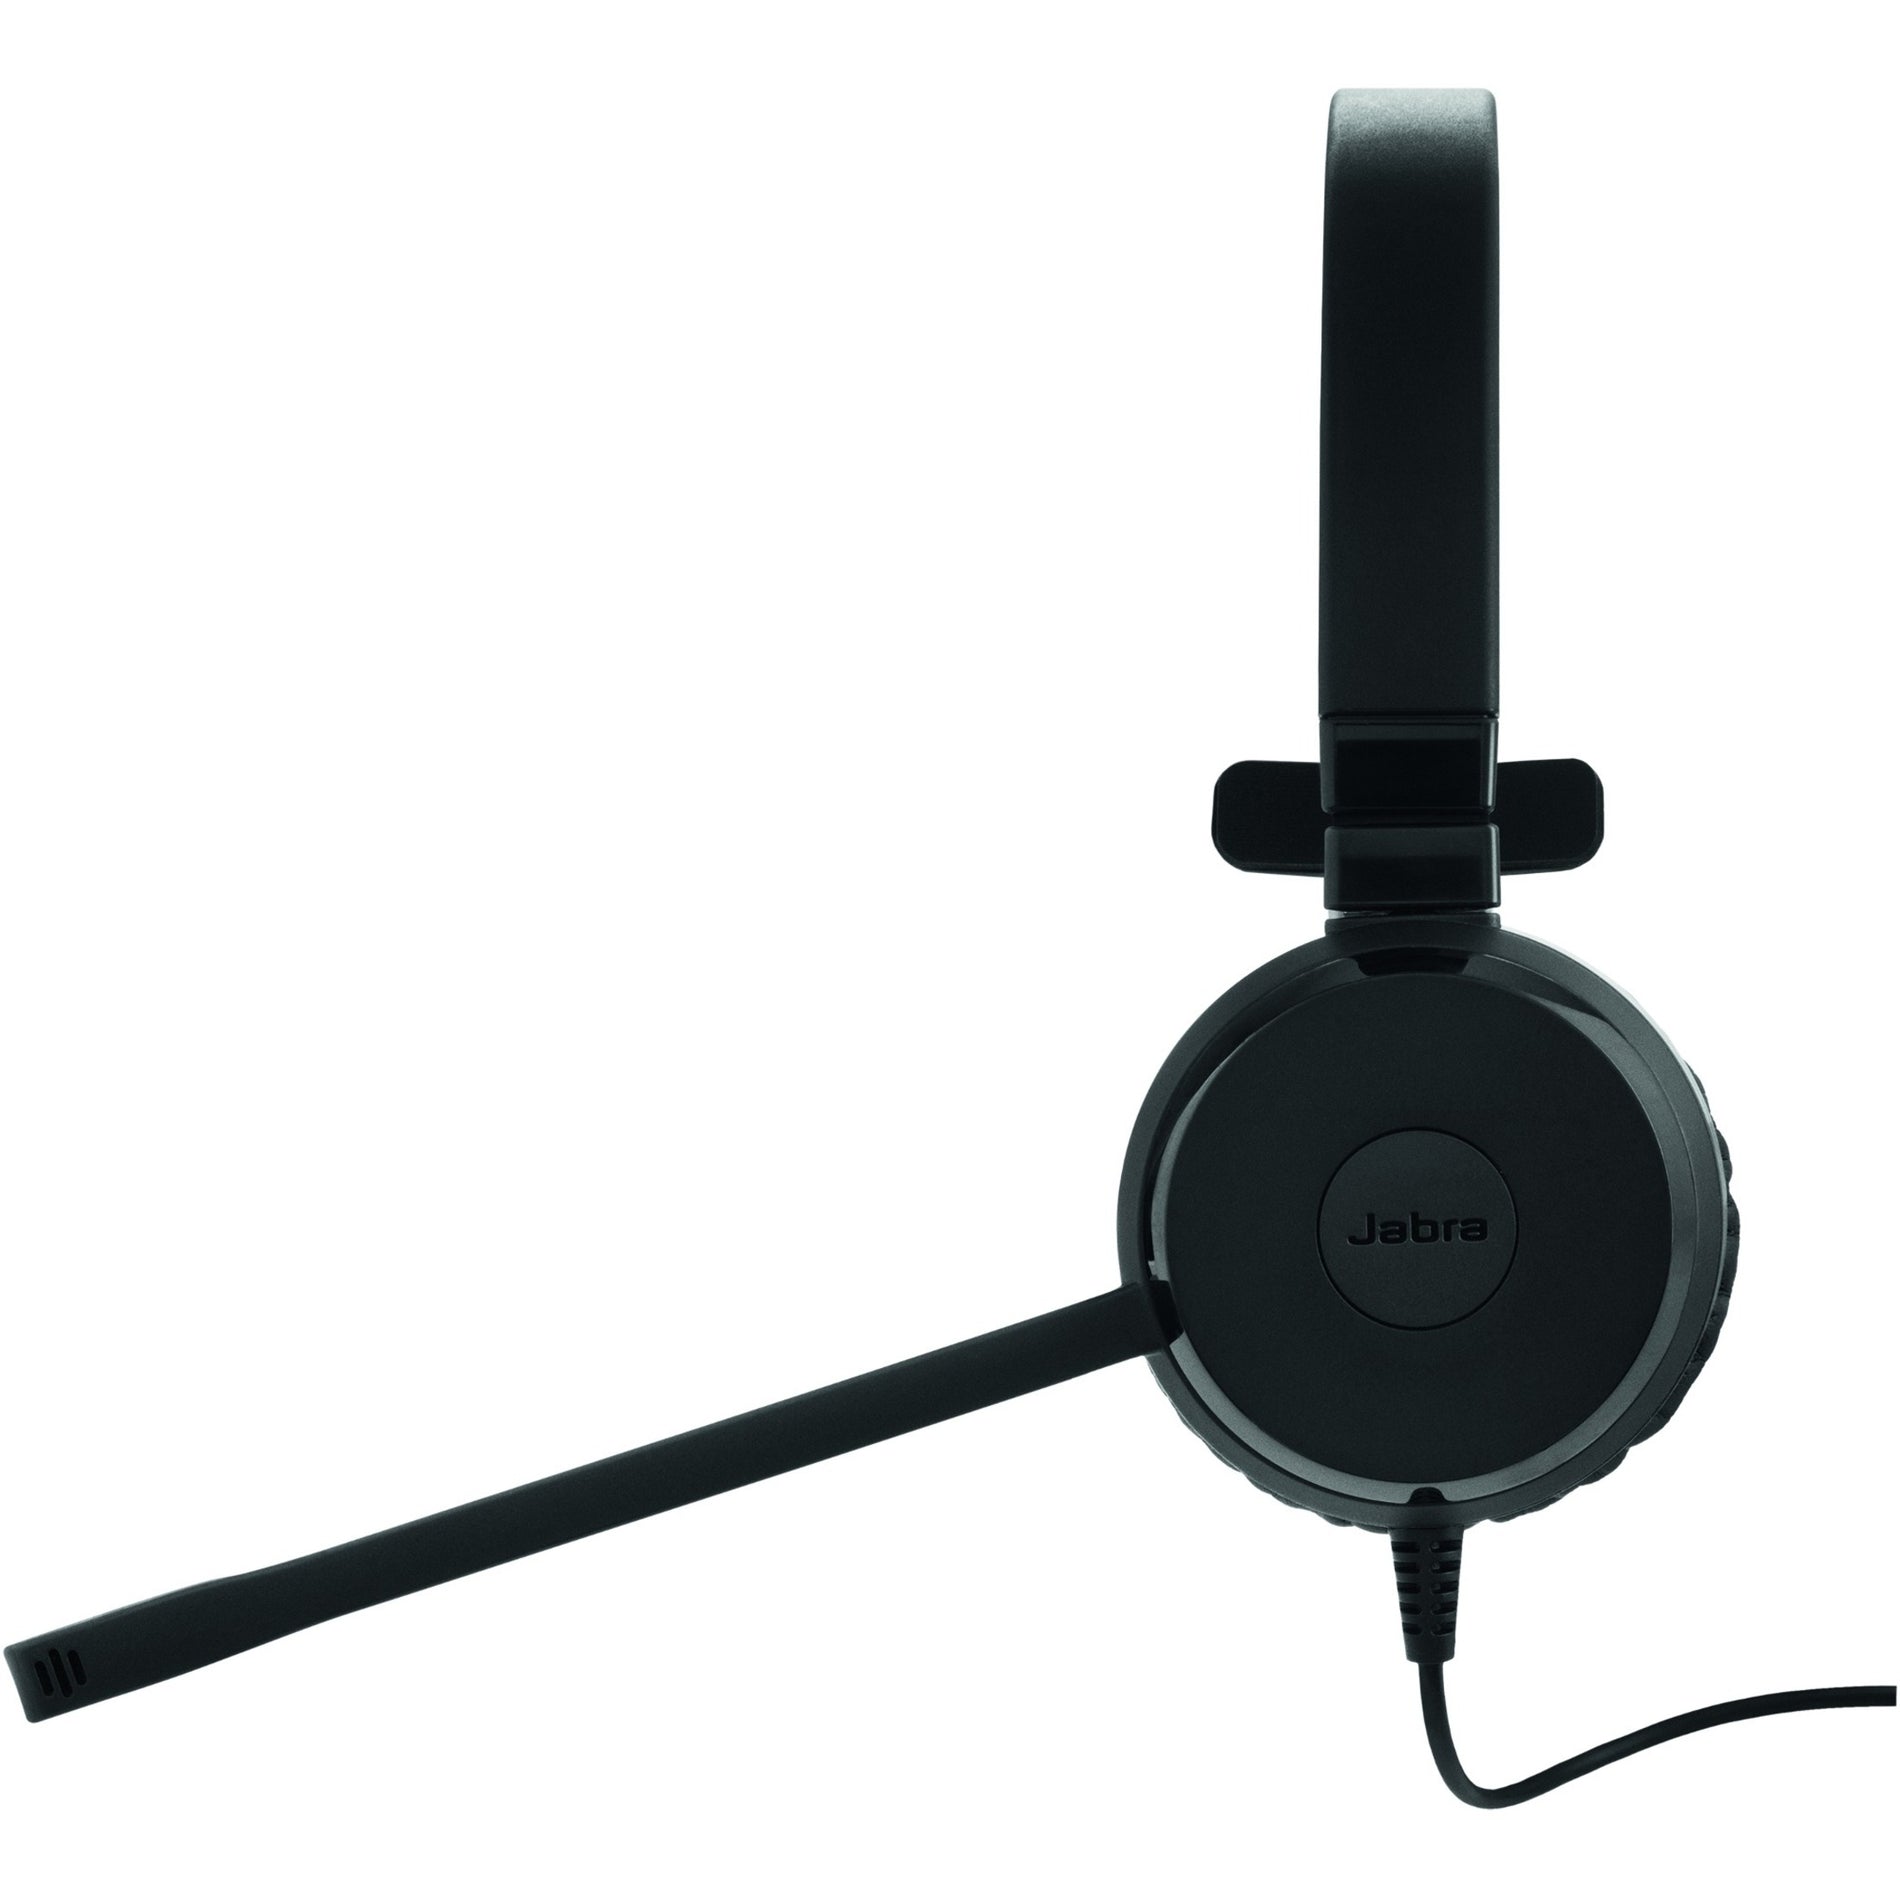 Jabra 14401-20 EVOLVE 30 Headset, Monaural Over-the-head Design